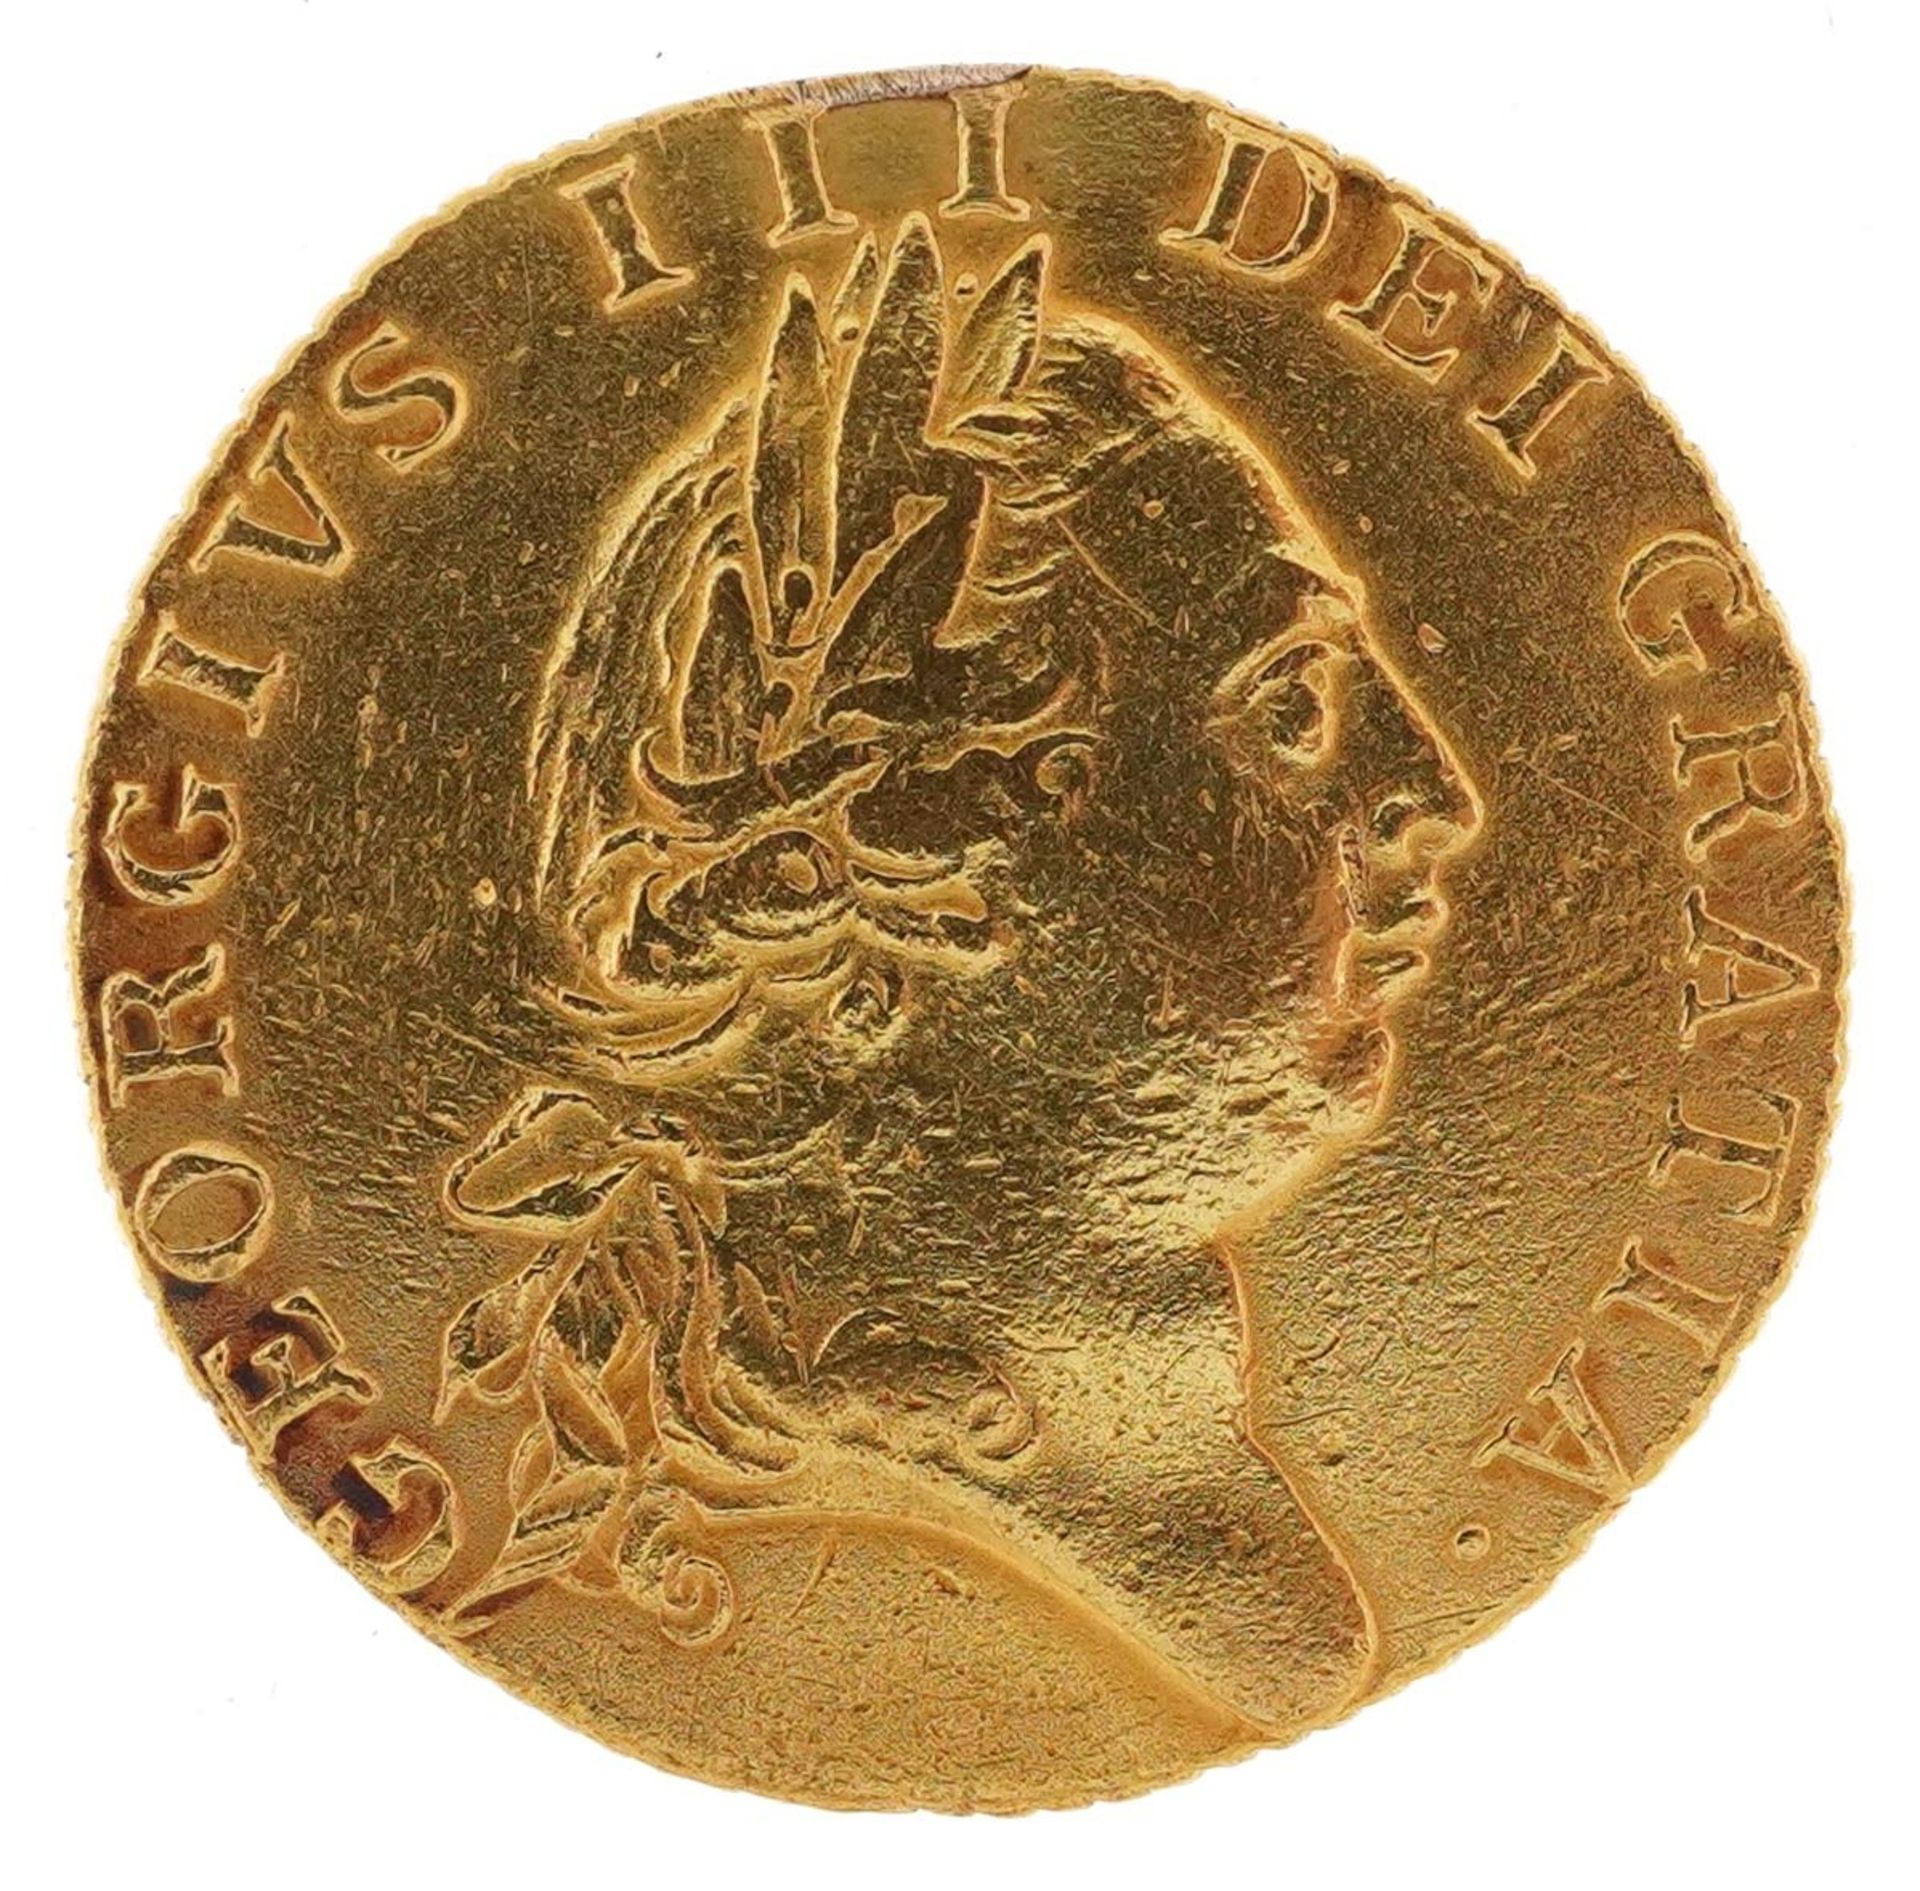 George III 1788 gold spade guinea - Image 2 of 3